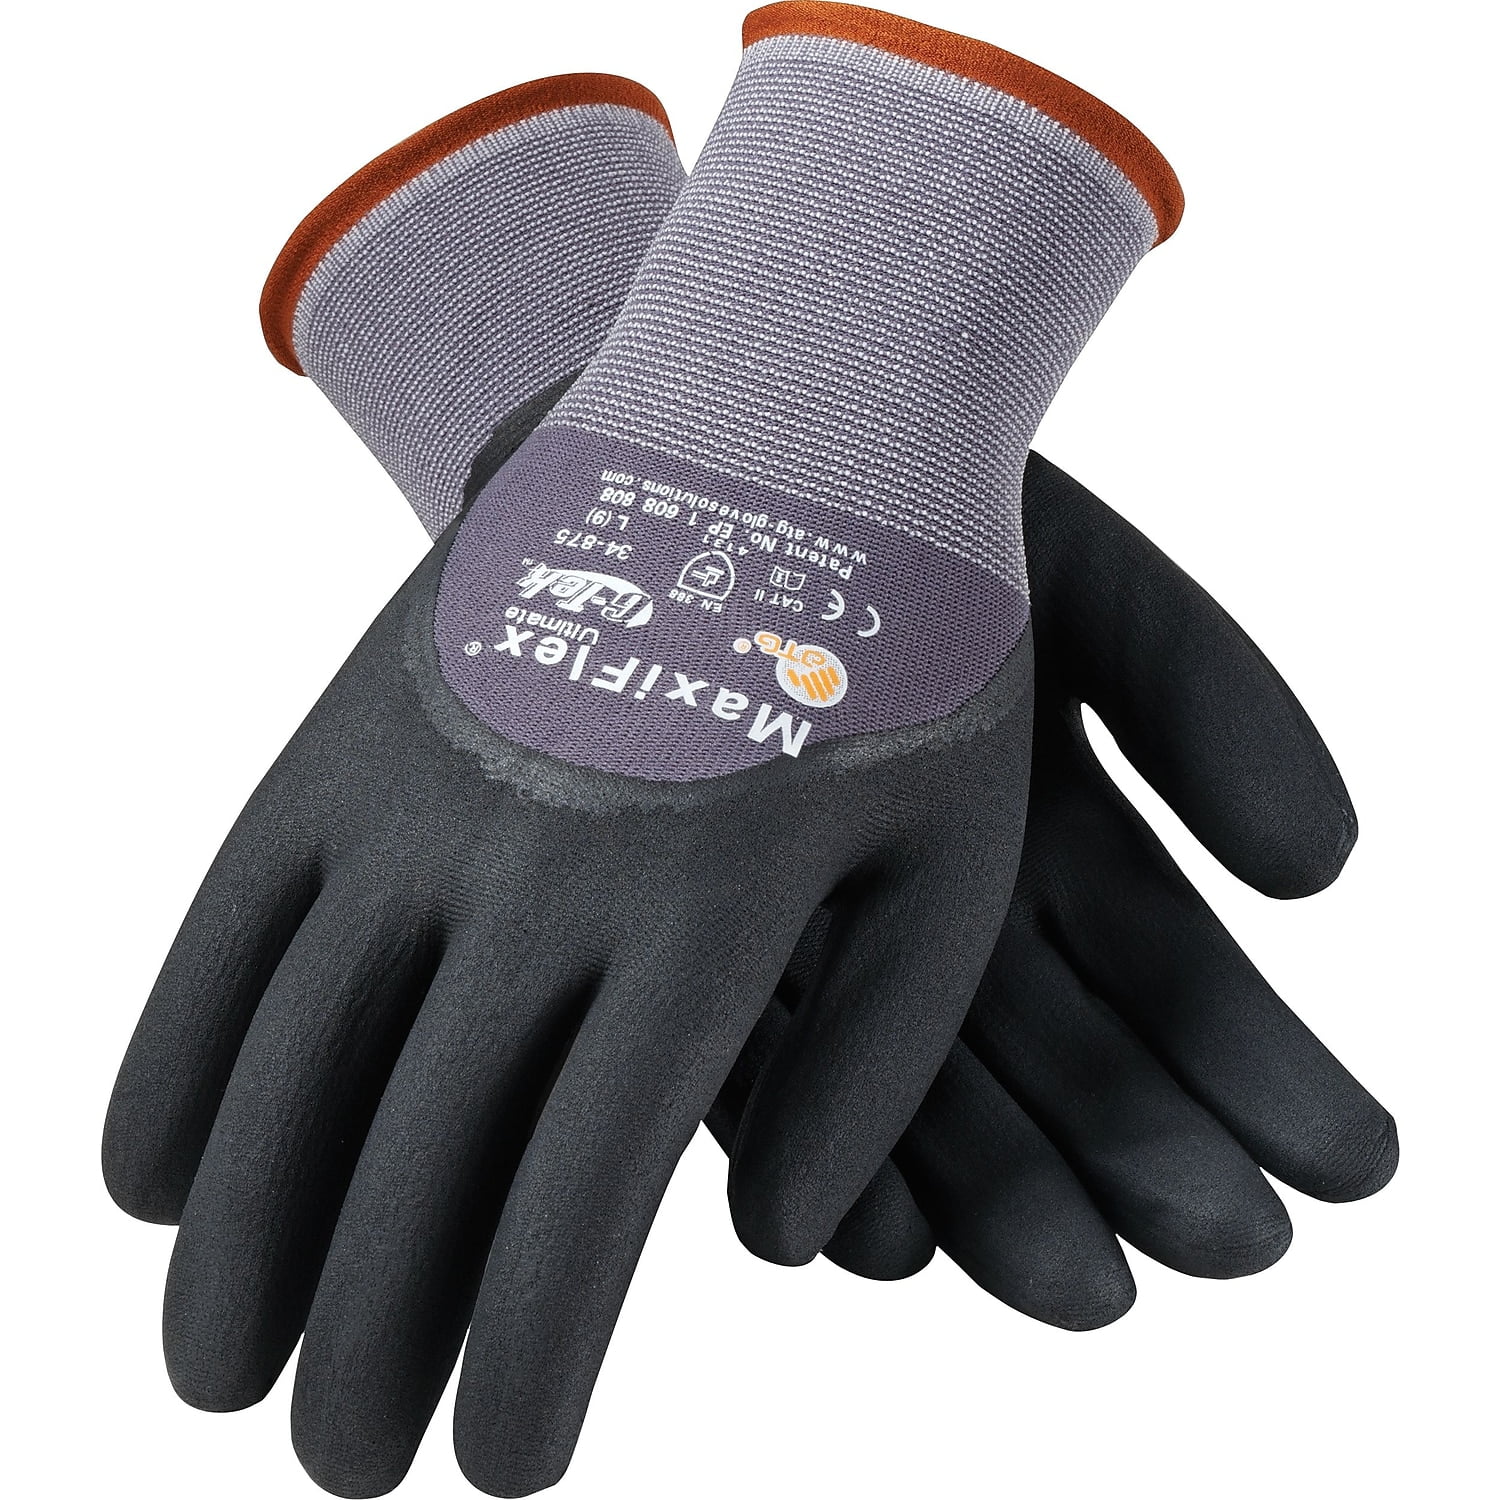 PIP GTek 34-876 MaxiFlex ATG Ultimate Nitrile Fully Coated Gloves 3 Pair Pack 